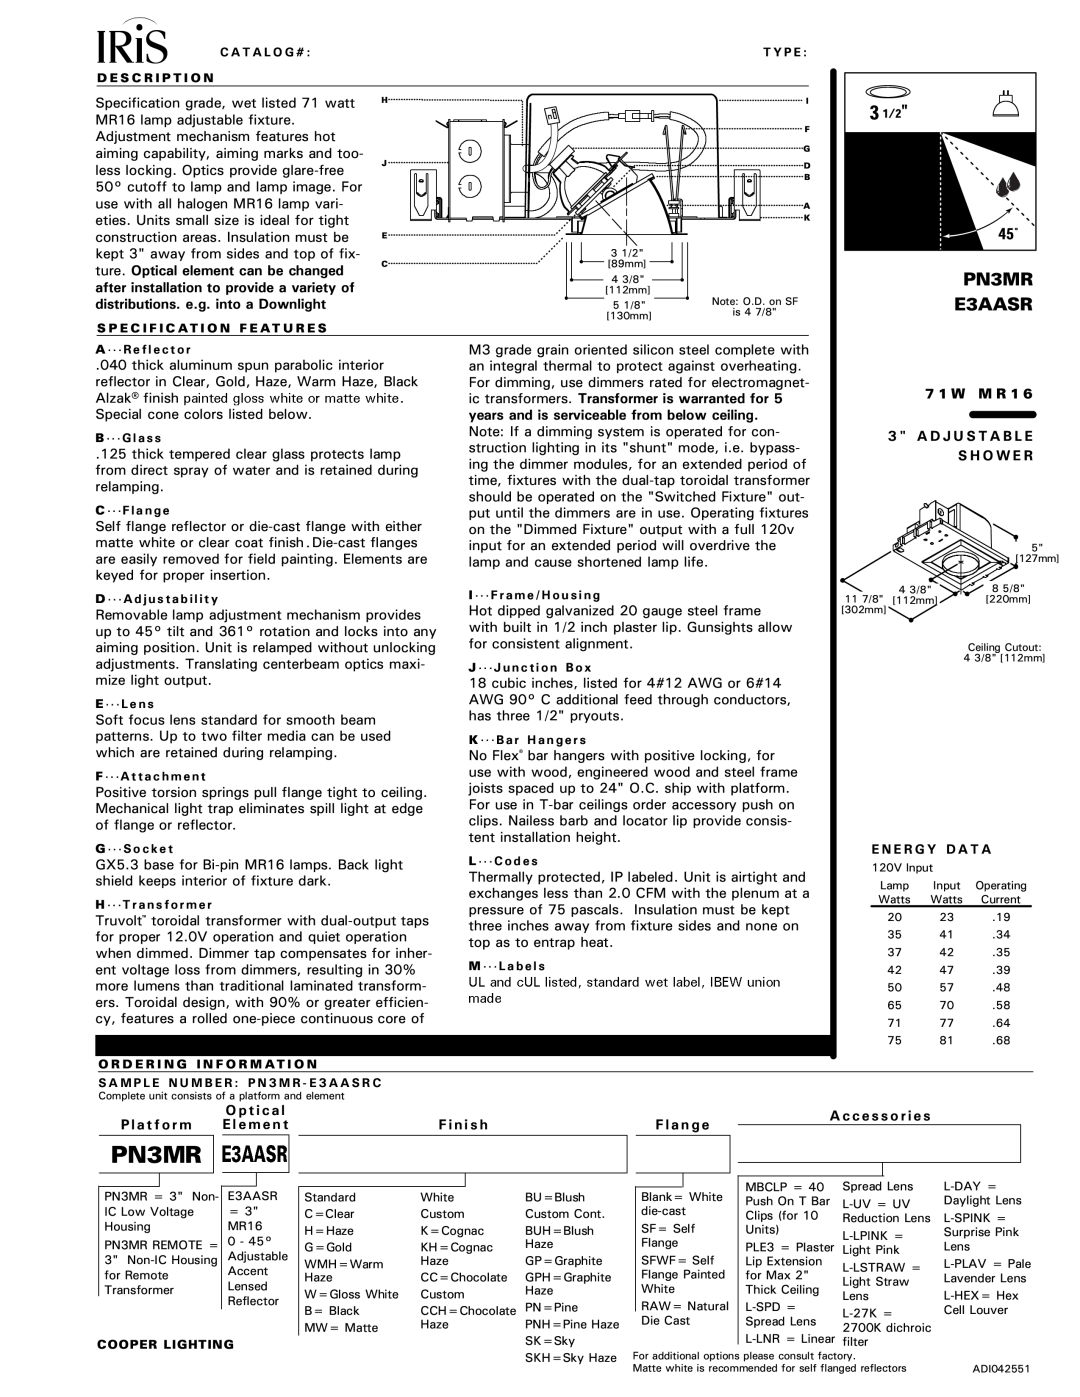 Cooper Lighting E3AASR, PN3MR manual ,  